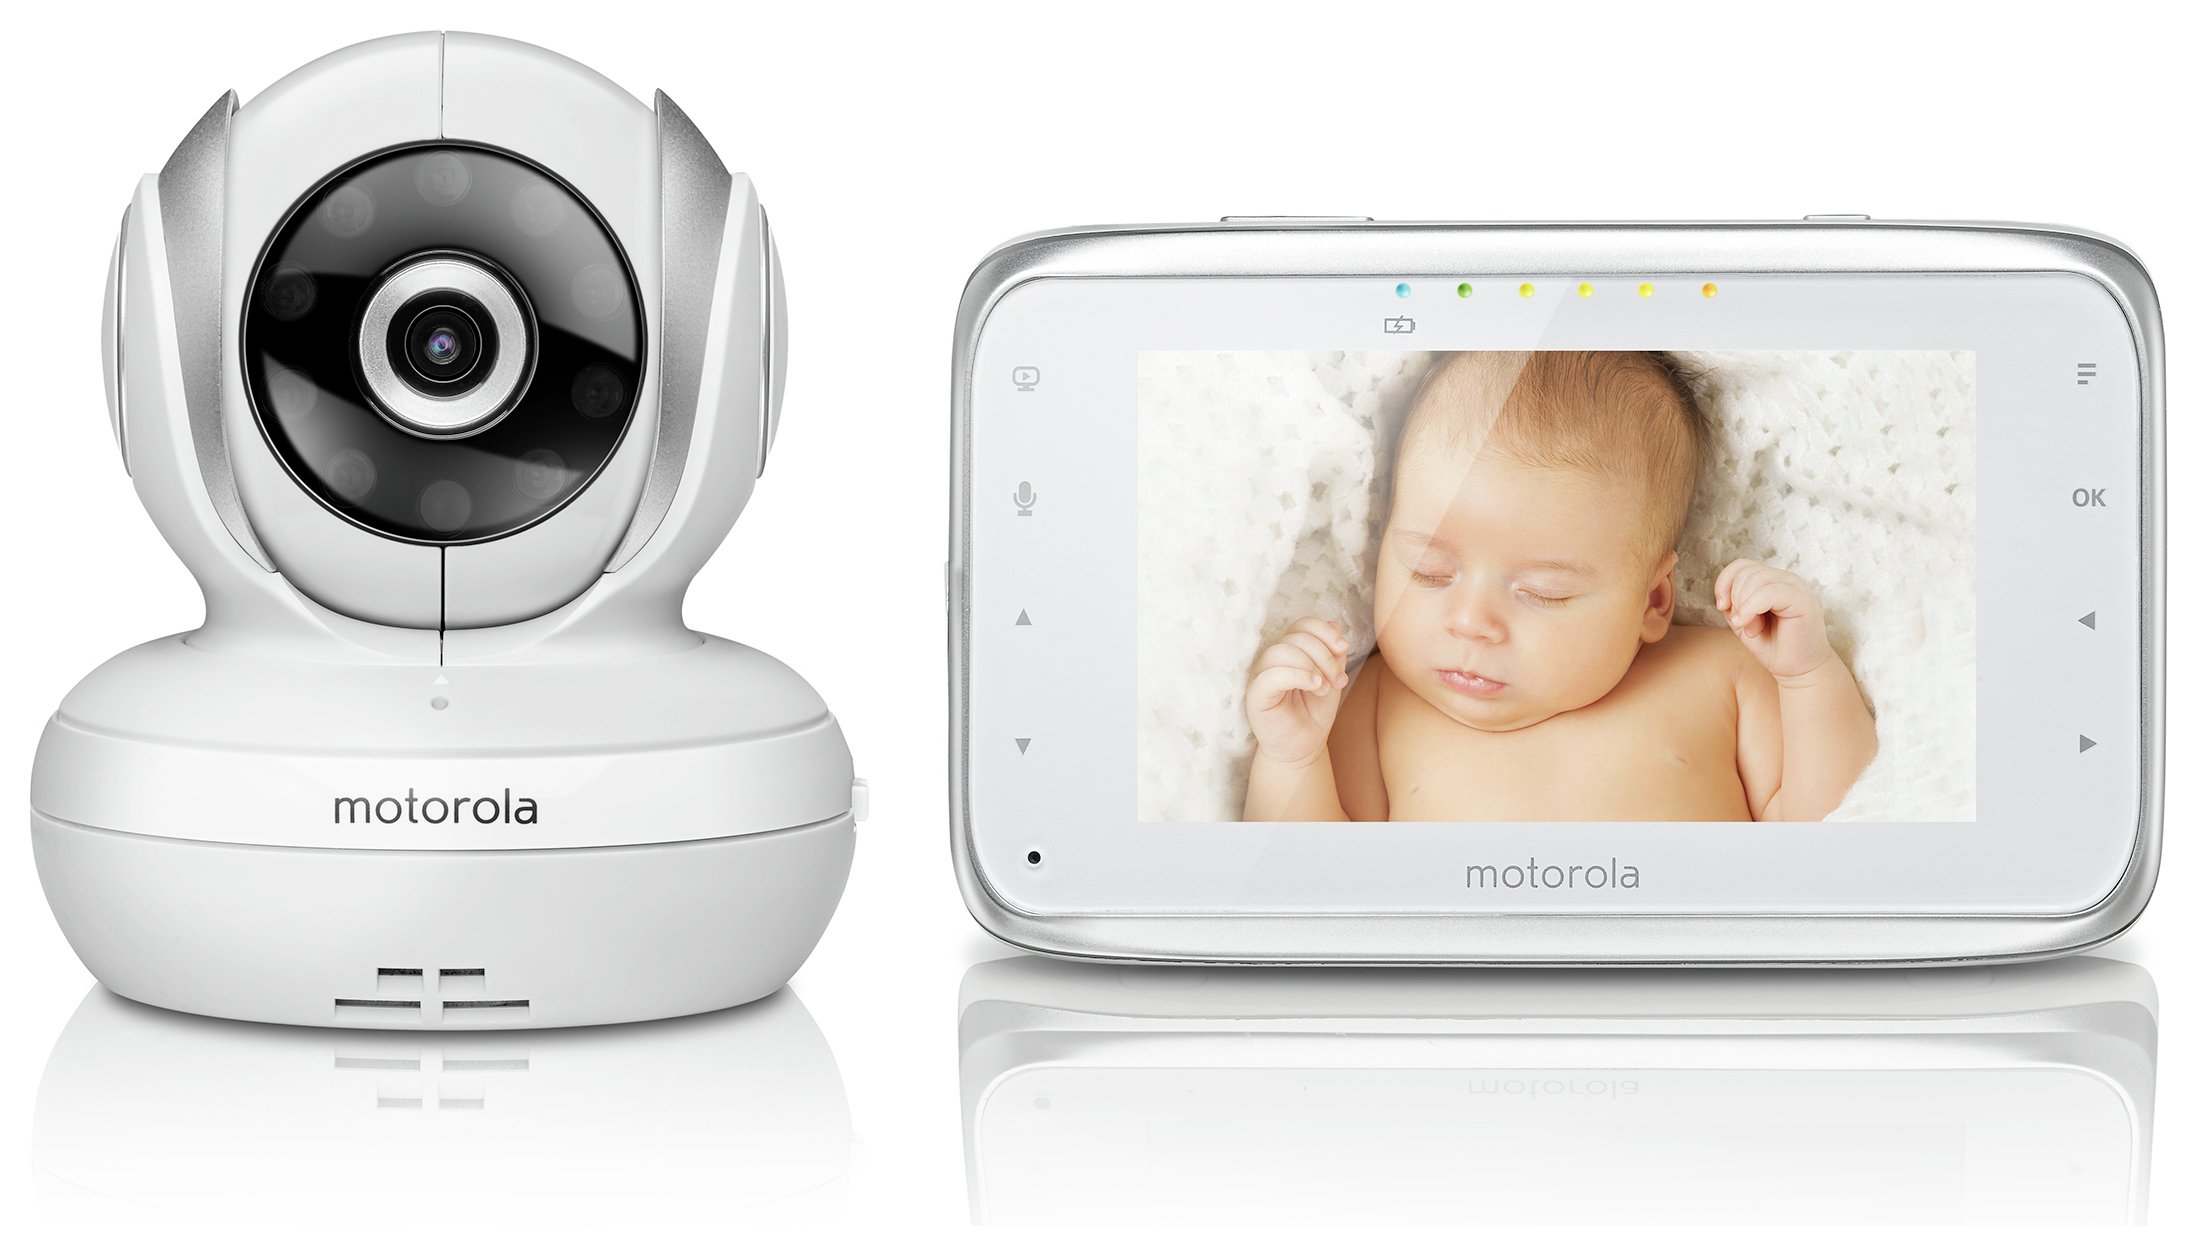 Motorola MBP38S Video Baby Monitor